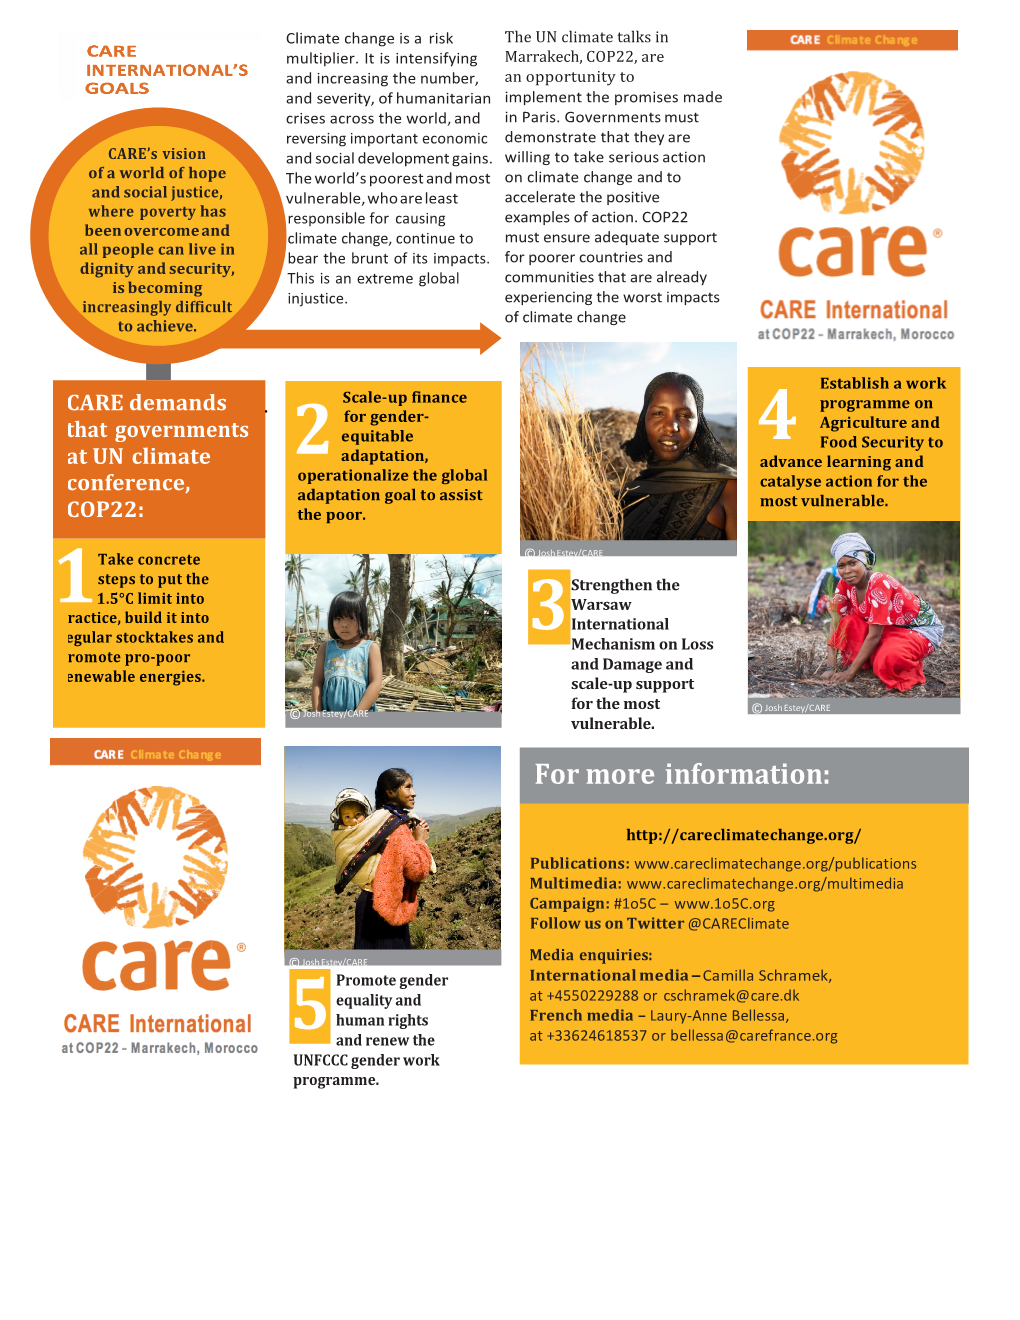 Care International's Goals